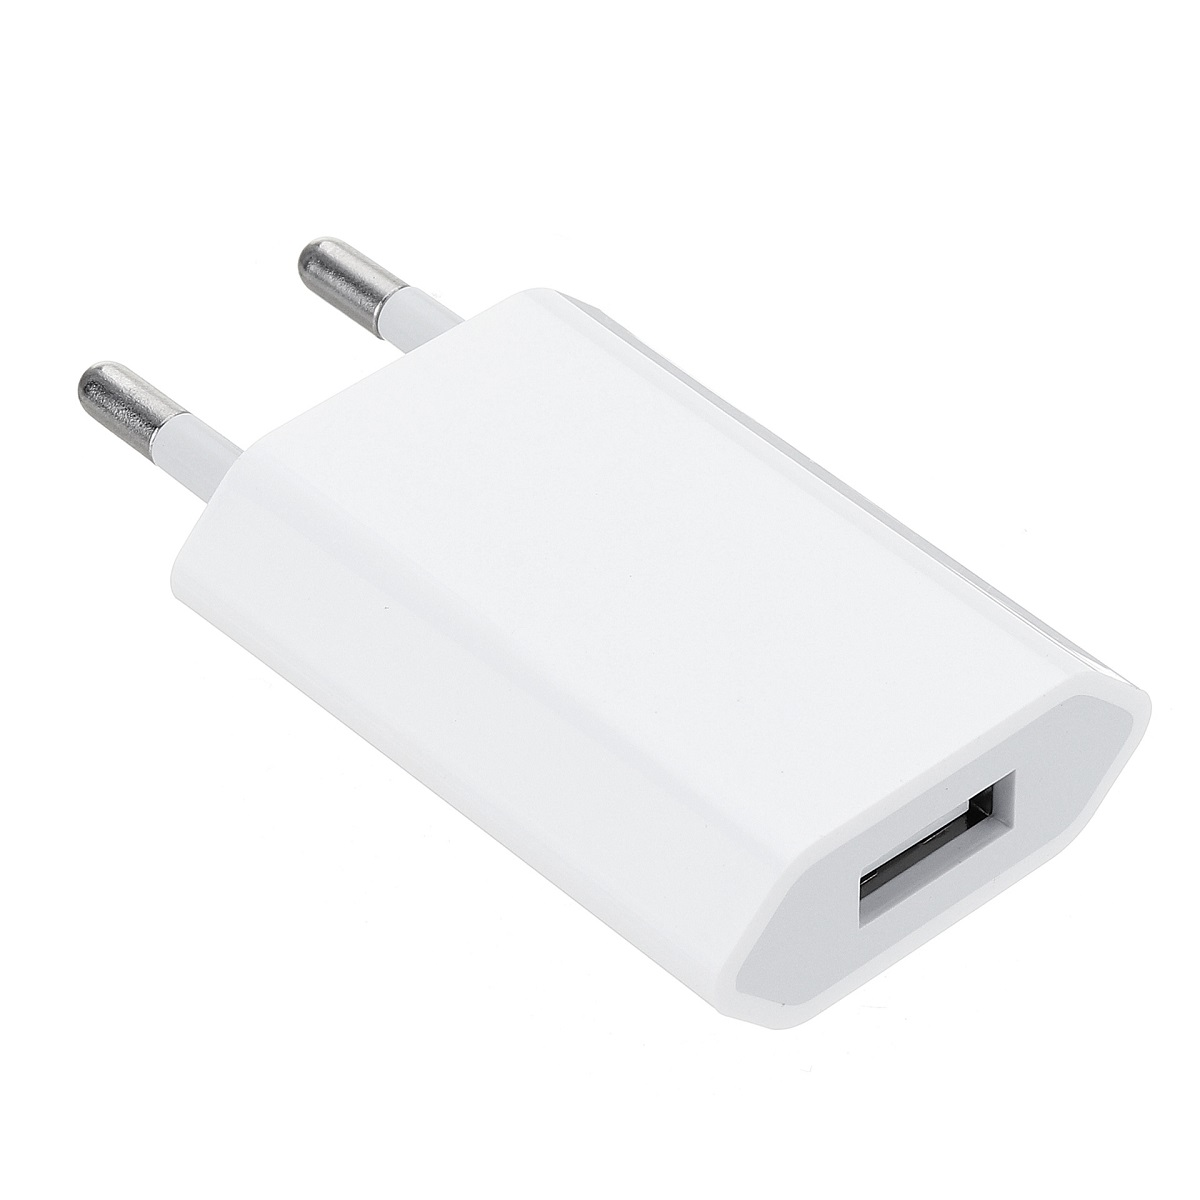 SE für Apple Gen USB-Ladegerät 12, 13, 11, Ladegerät Apple, VENTARENT Weiß mit 8, 14, X, Ladekabel XS, Lightning iPhone XR, Ladekabel iPhone Netzteil